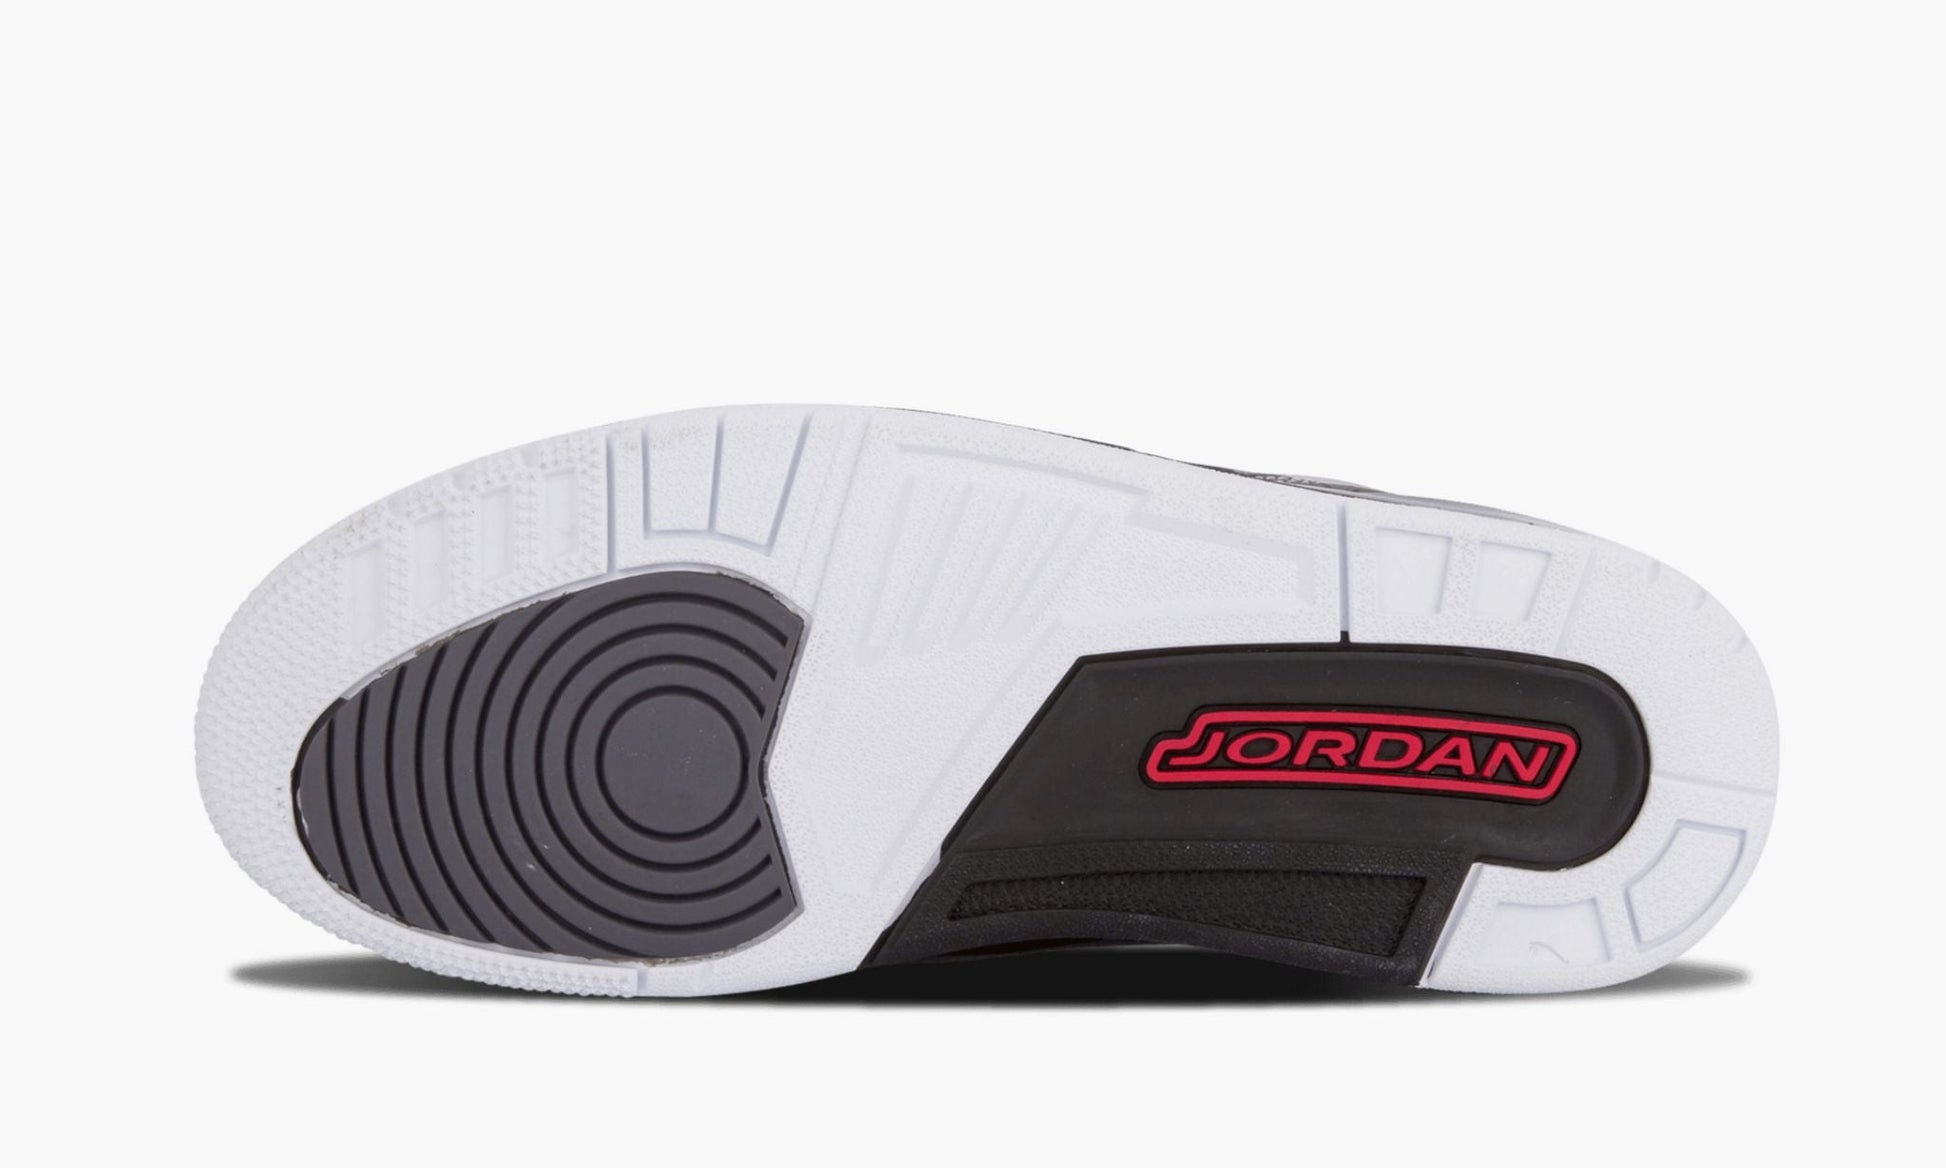 Air Jordan 3 Retro "Stealth"